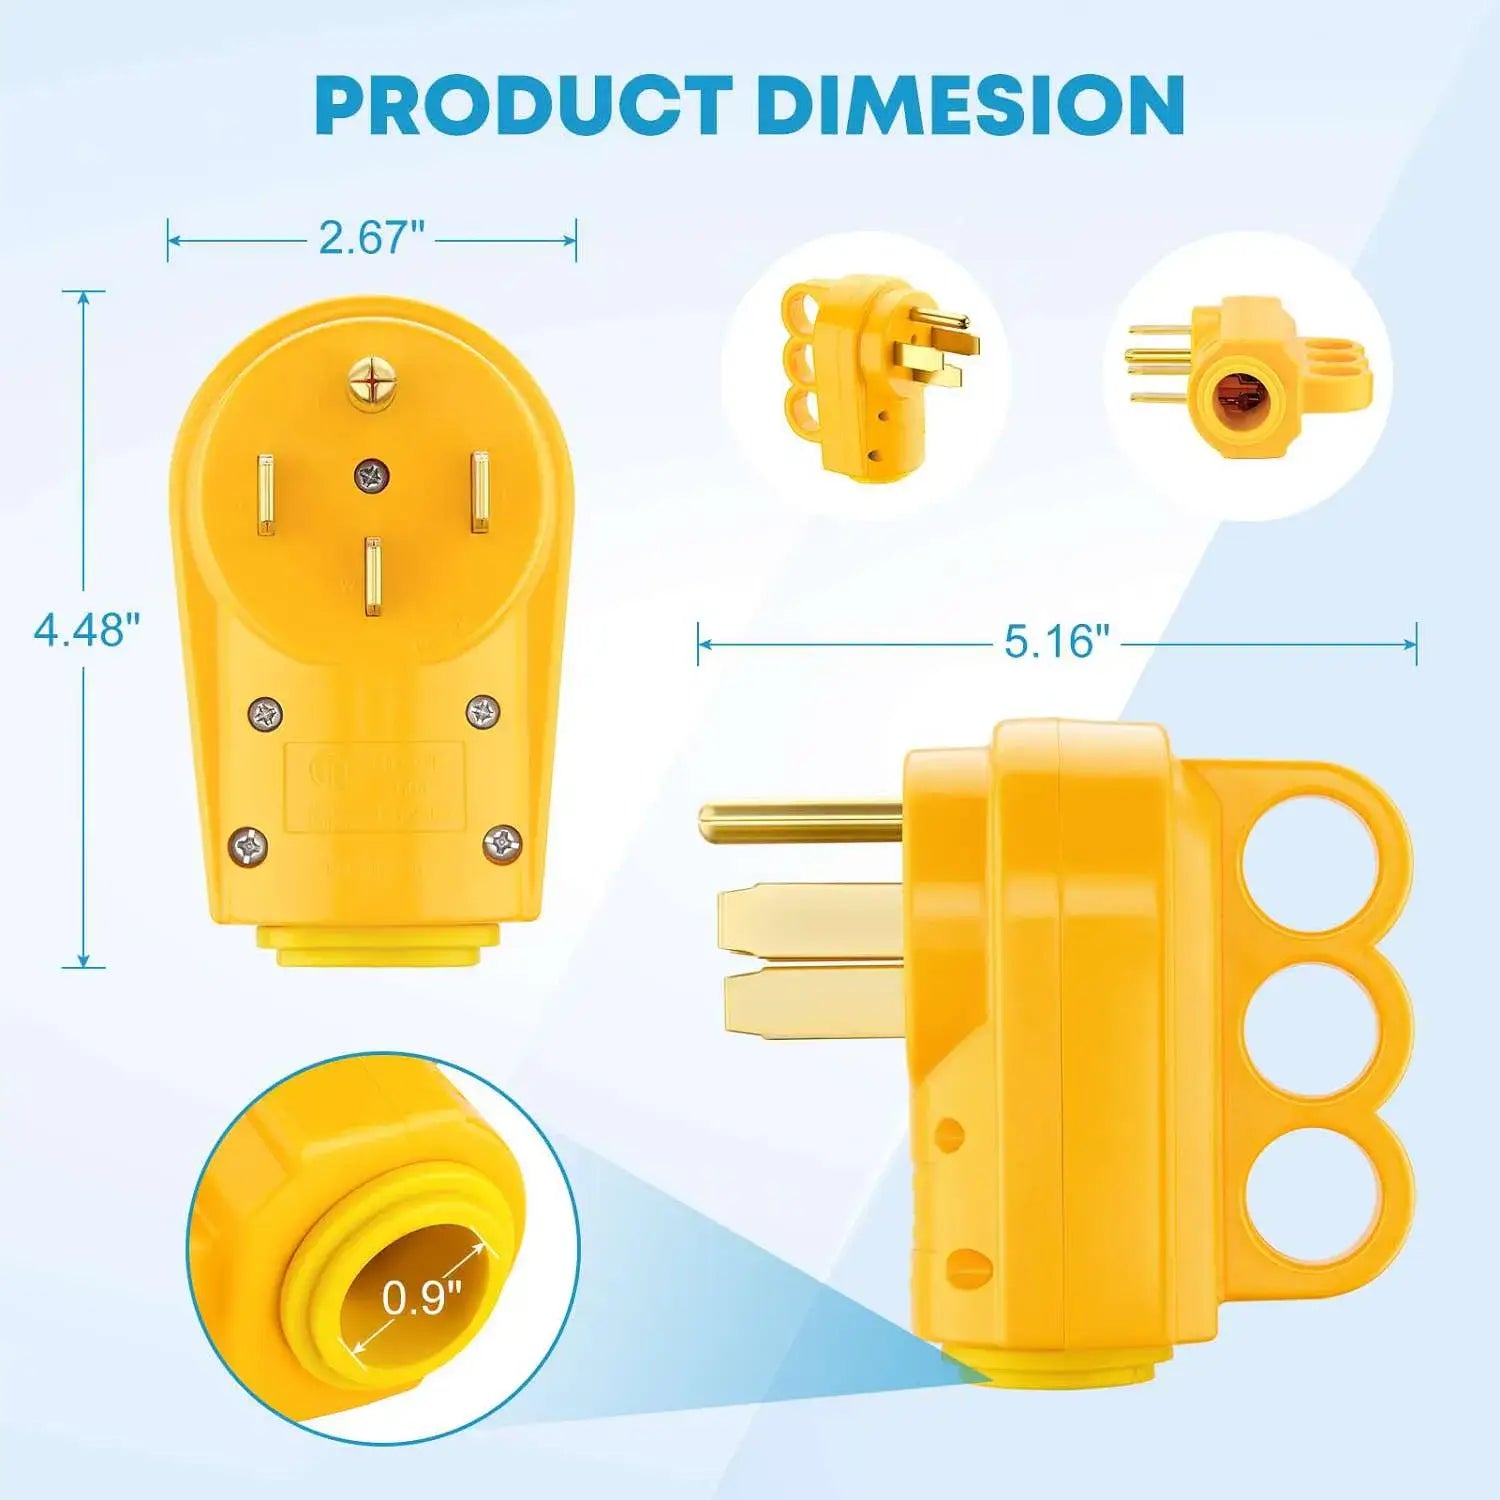 Kohree-50A RV male plug product dimension